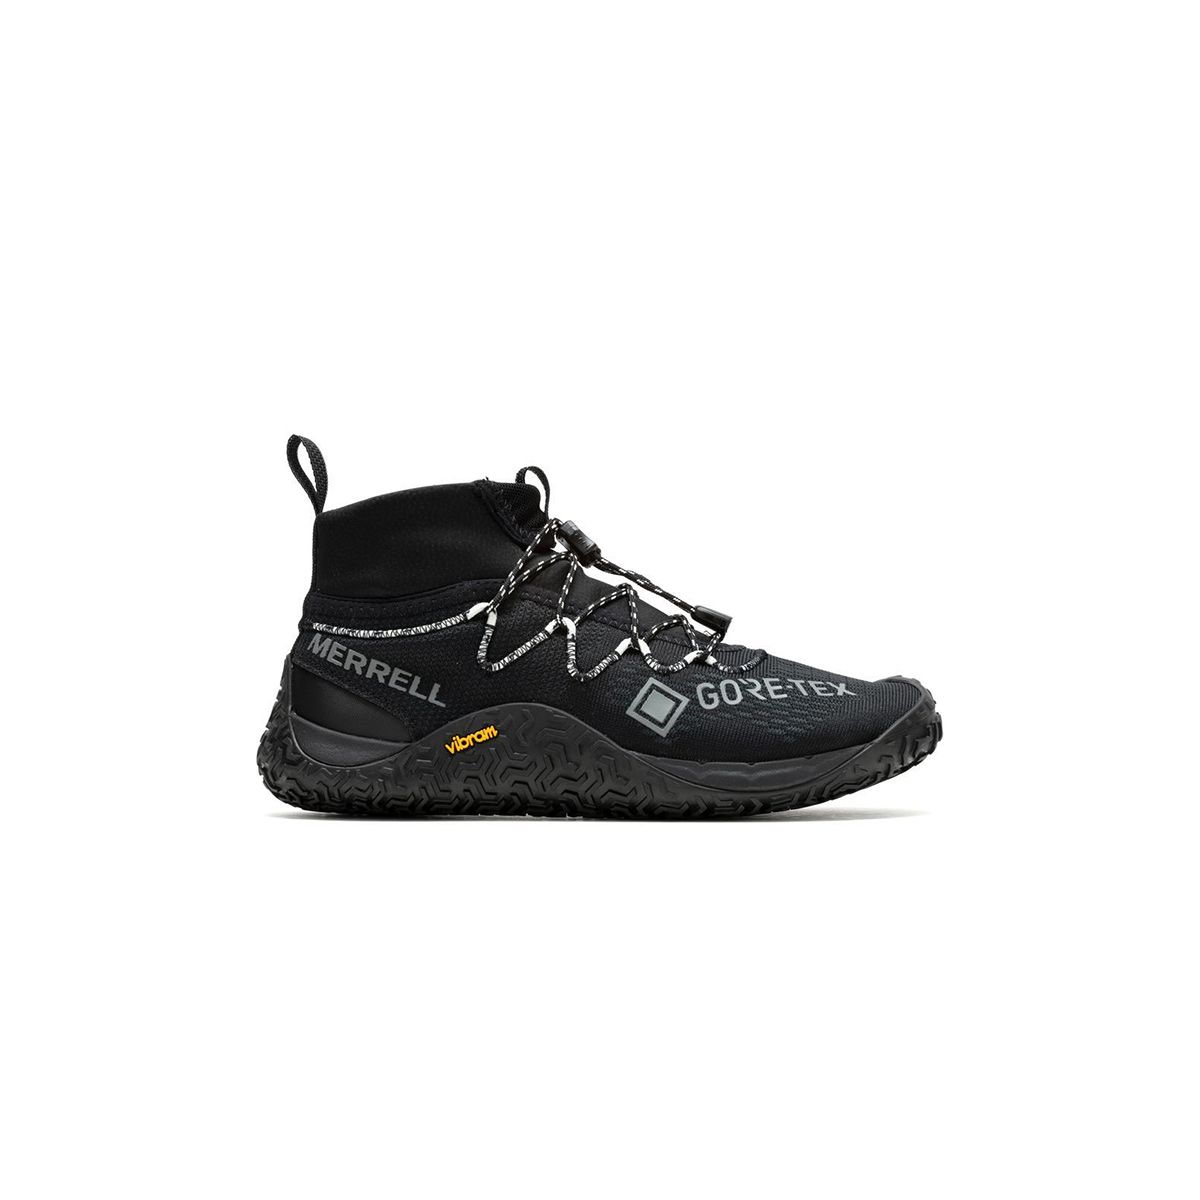 Merrell Trail Glove 7 GTX  Minimalist shoe for everything